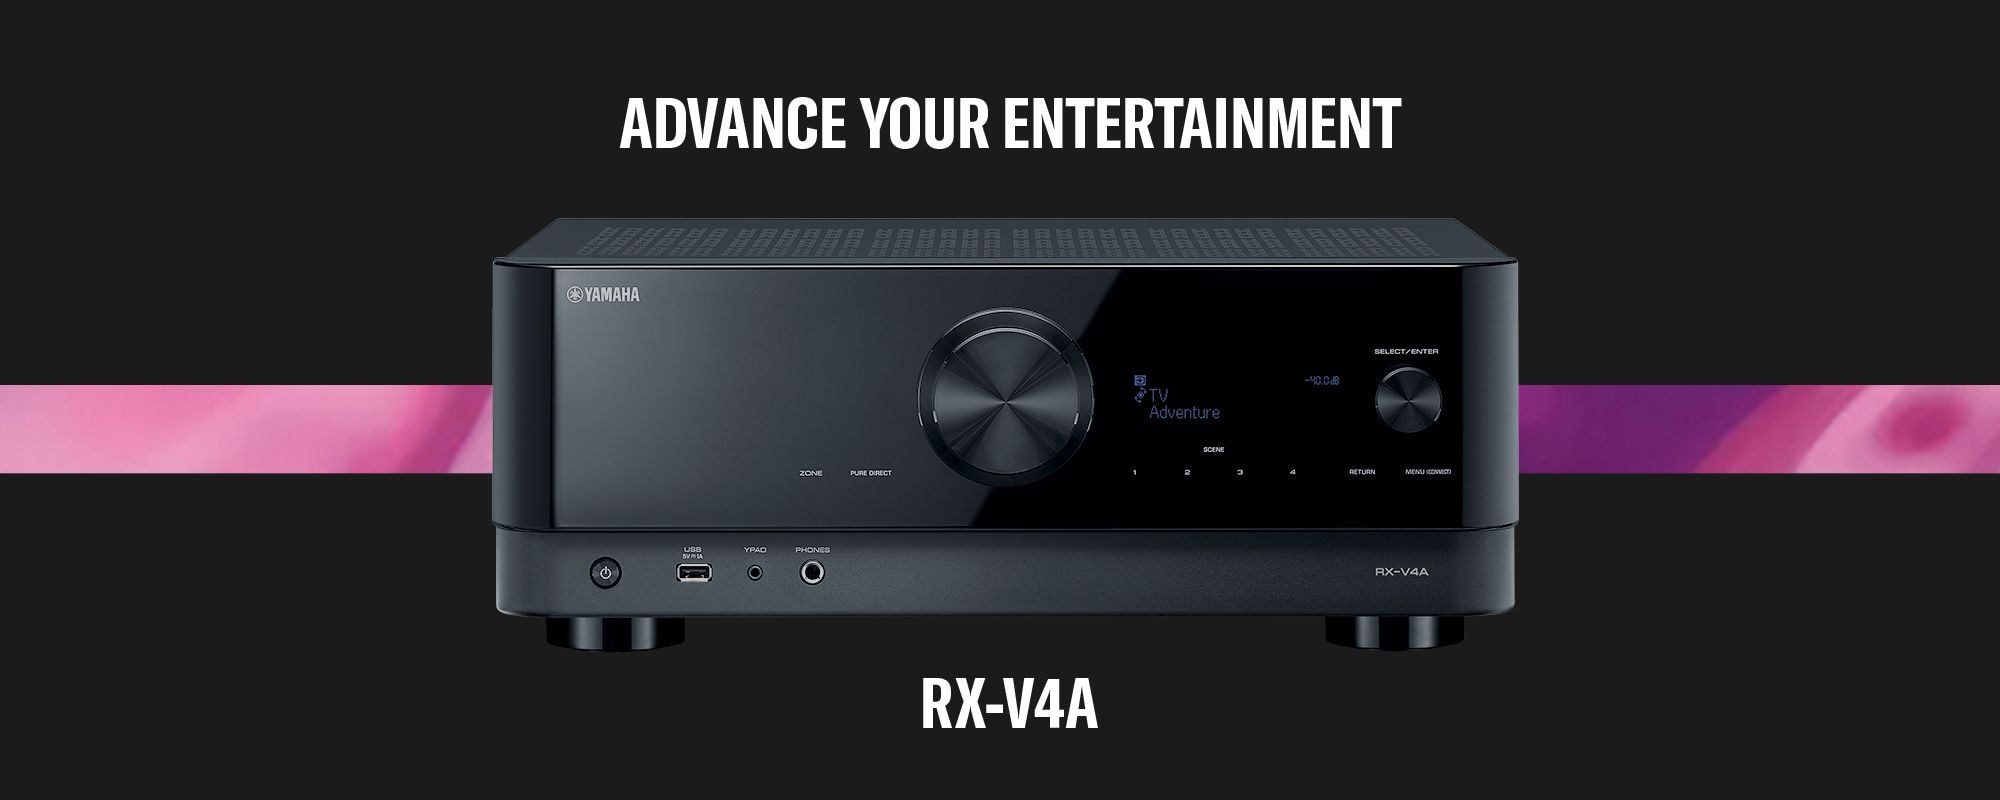 Advance Your Entertainment - Yamaha RX-V4A Receiver Header - Desktop